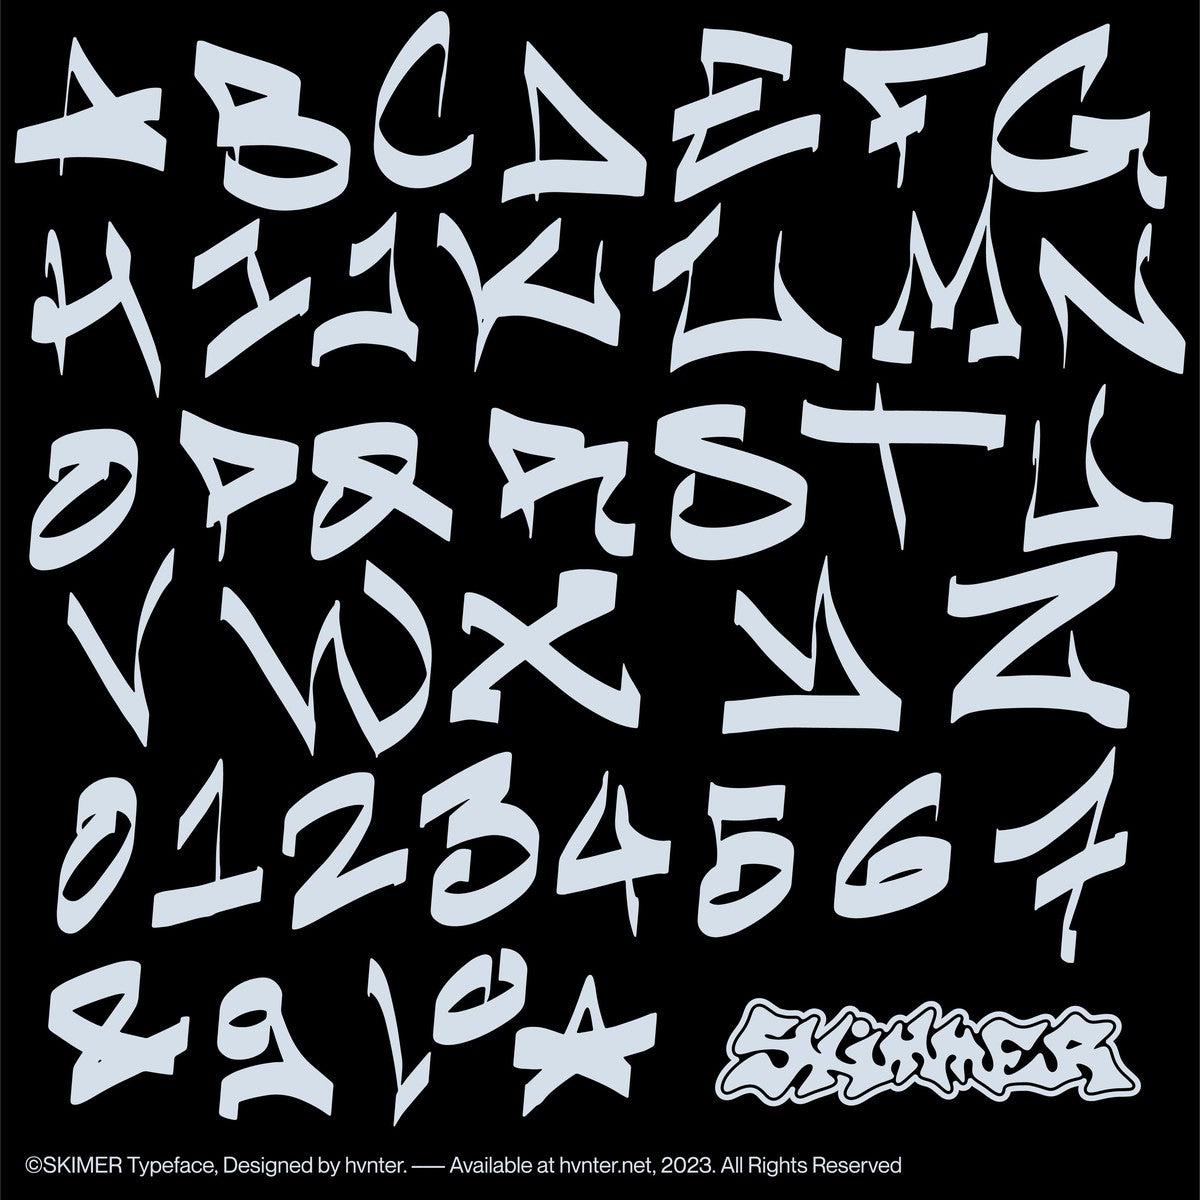 Skimmer Typeface